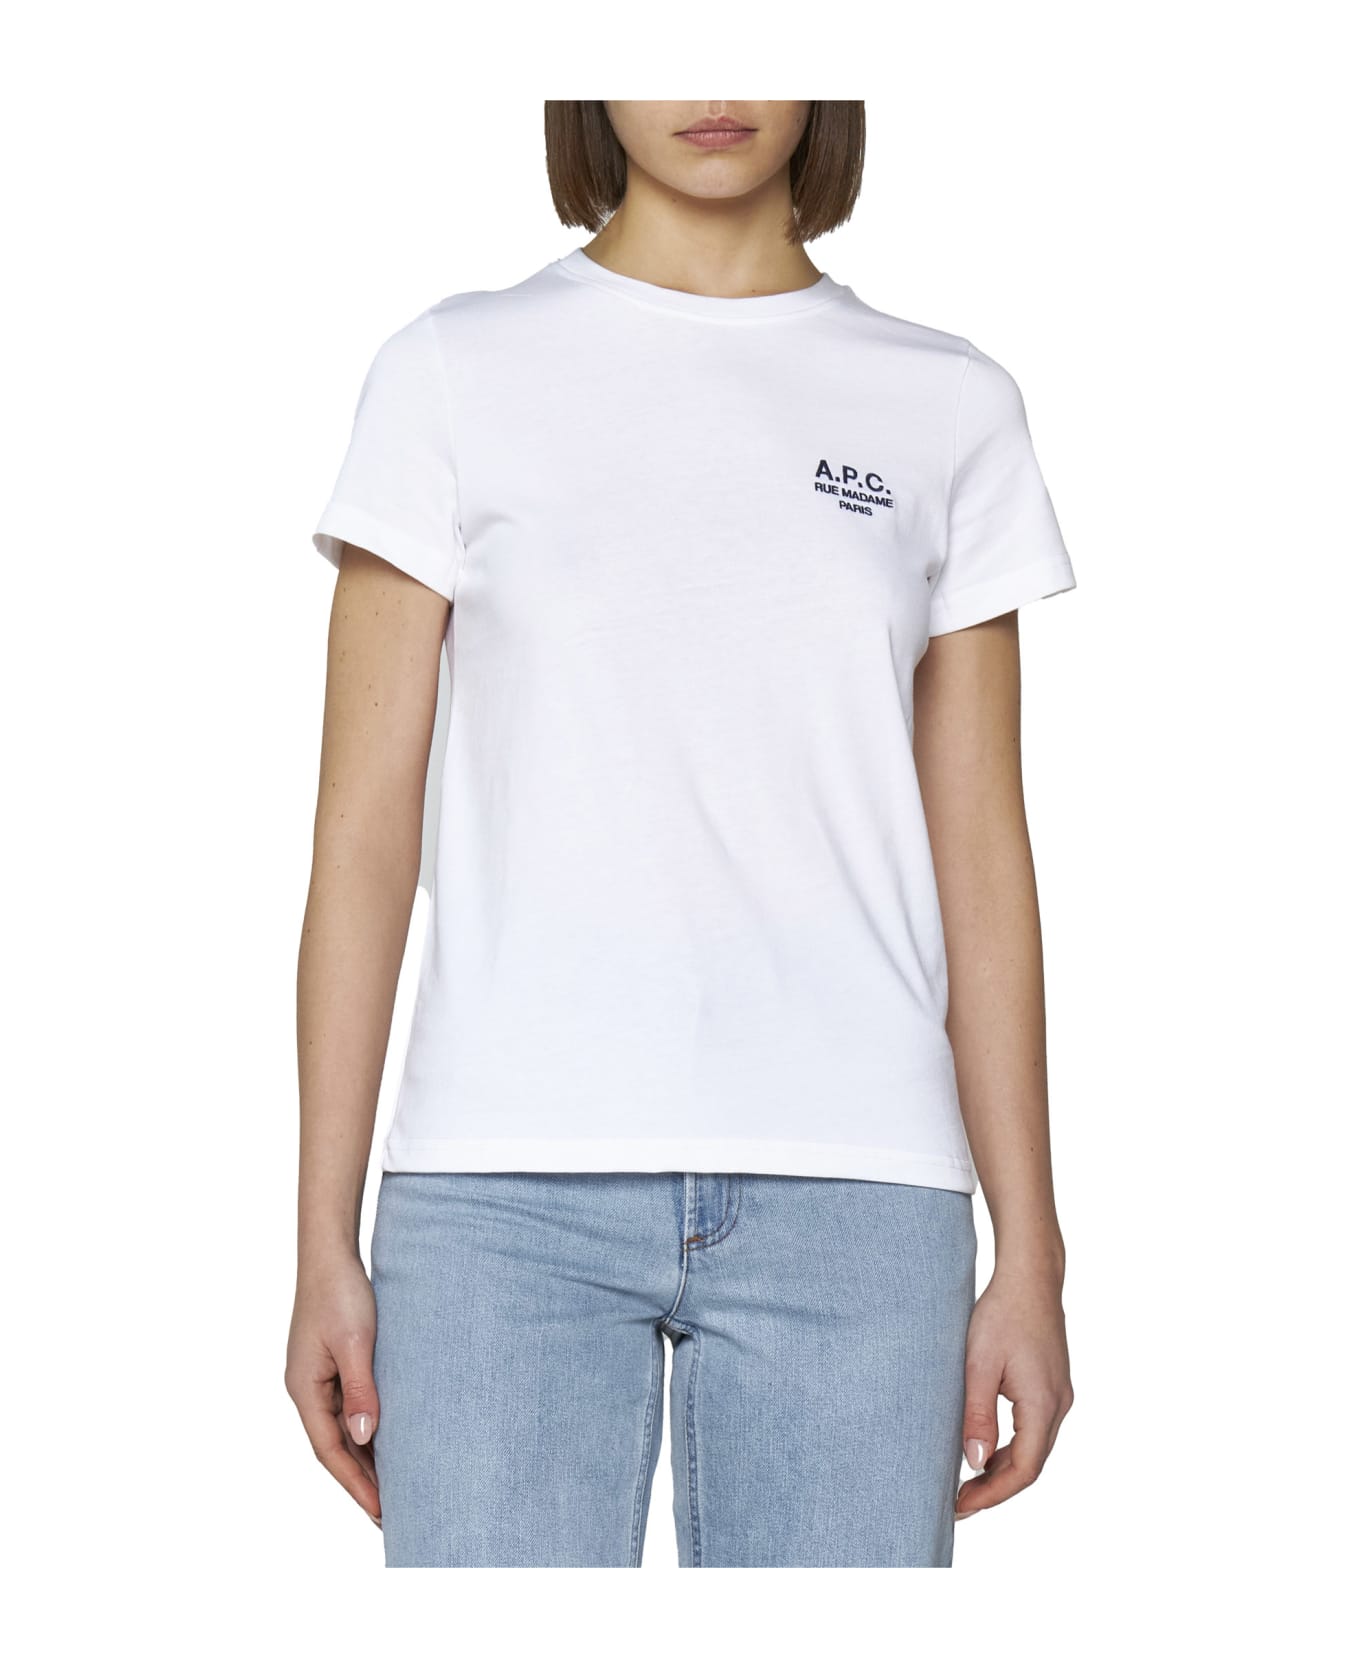 A.P.C. Denise T-shirt - White Tシャツ